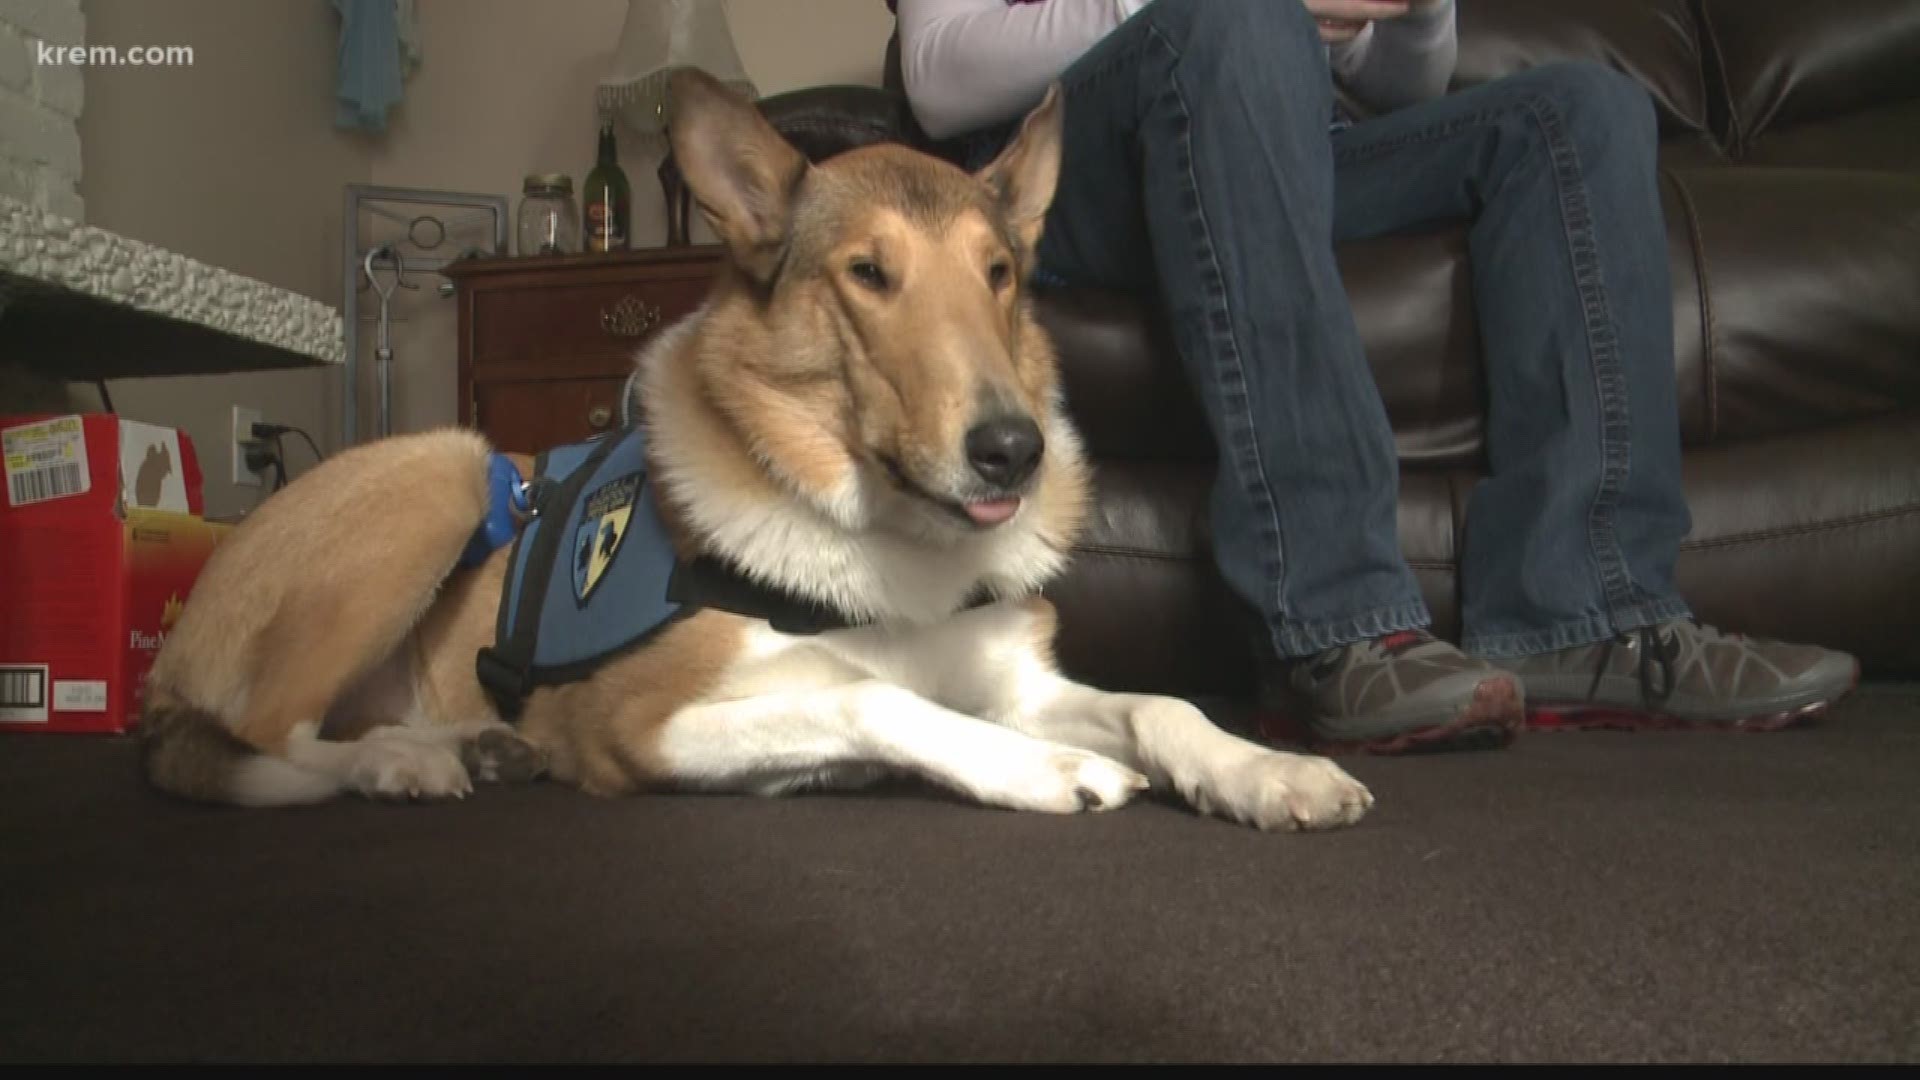 Disabled veteran's service dog put down after Lymphoma diagnosis